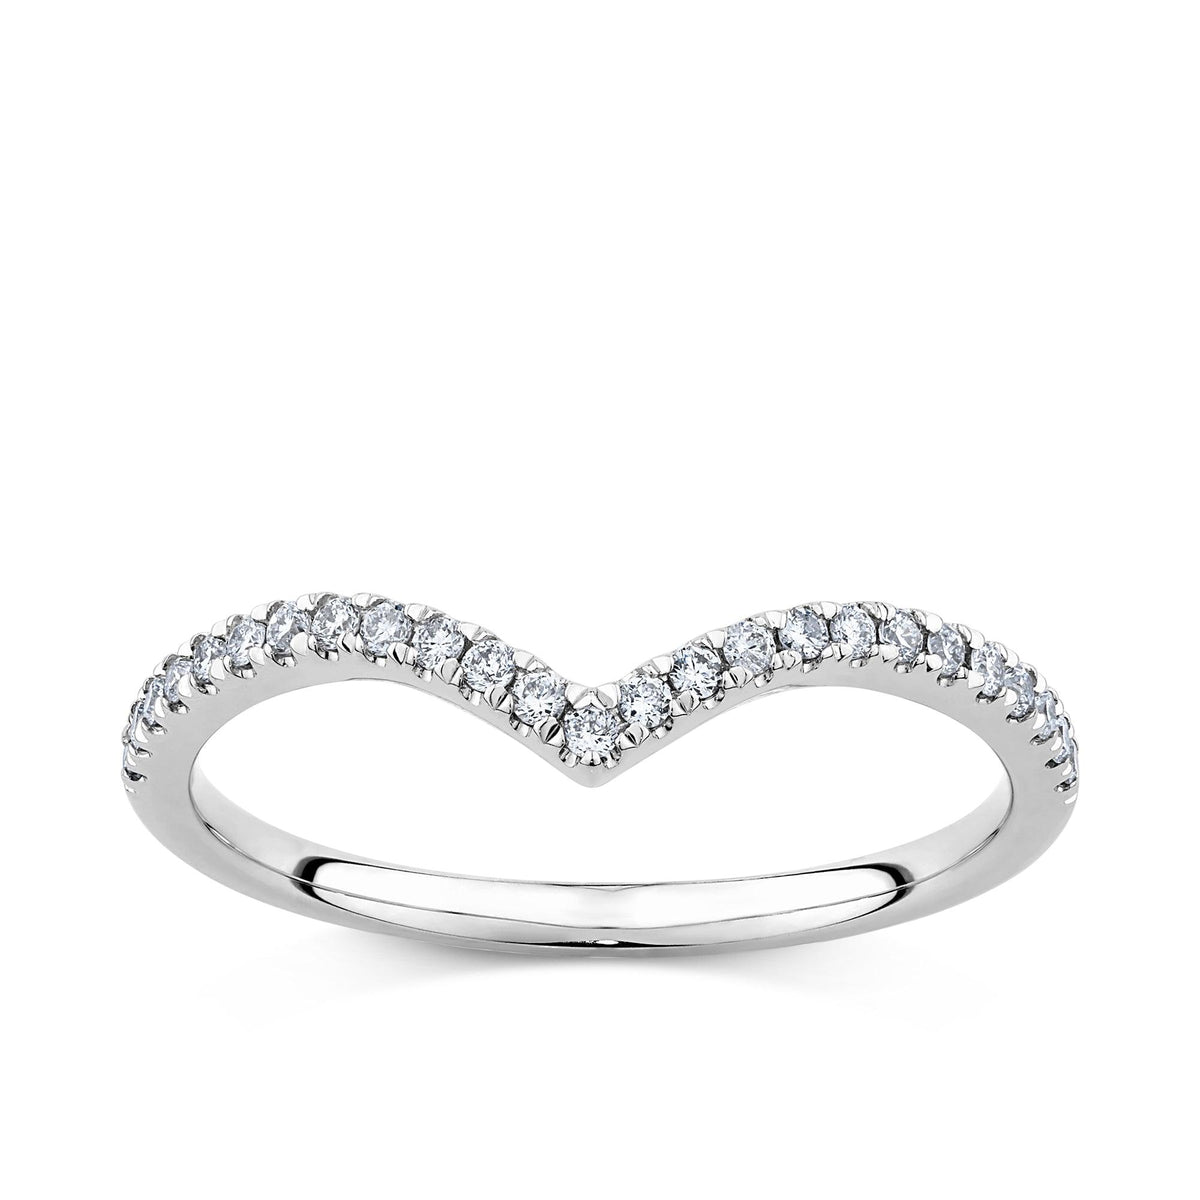 0.15ct TW Diamond Dress Ring in 9ct White Gold - Wallace Bishop